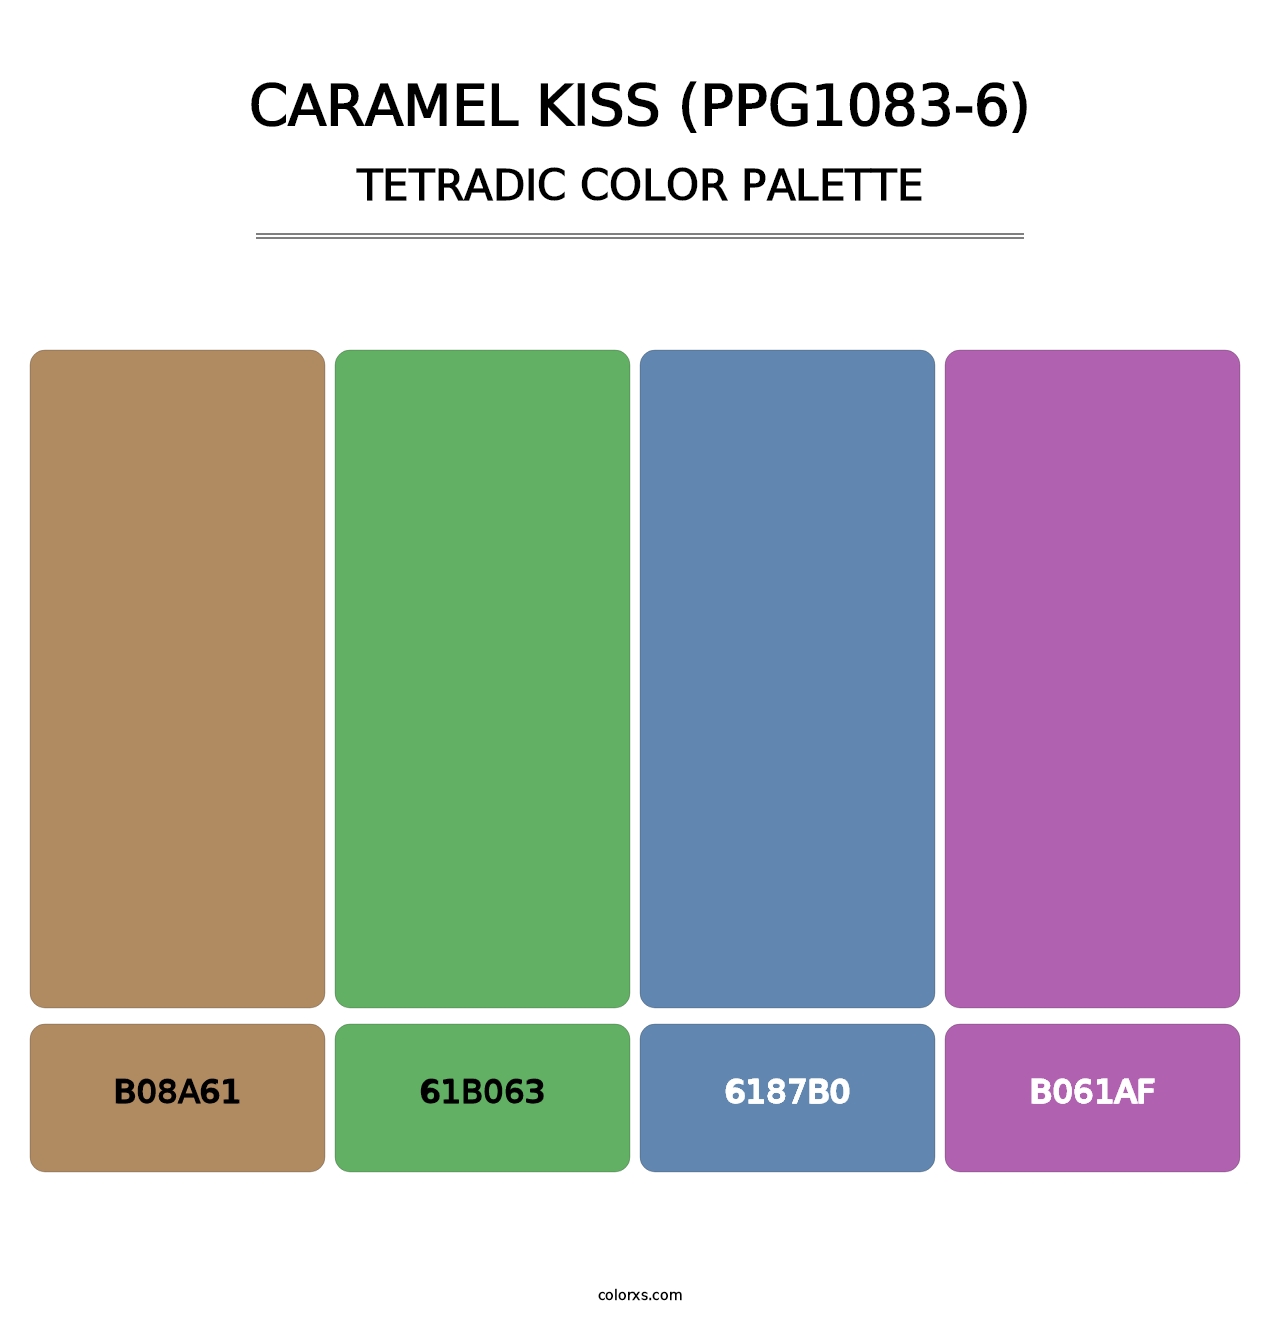 Caramel Kiss (PPG1083-6) - Tetradic Color Palette